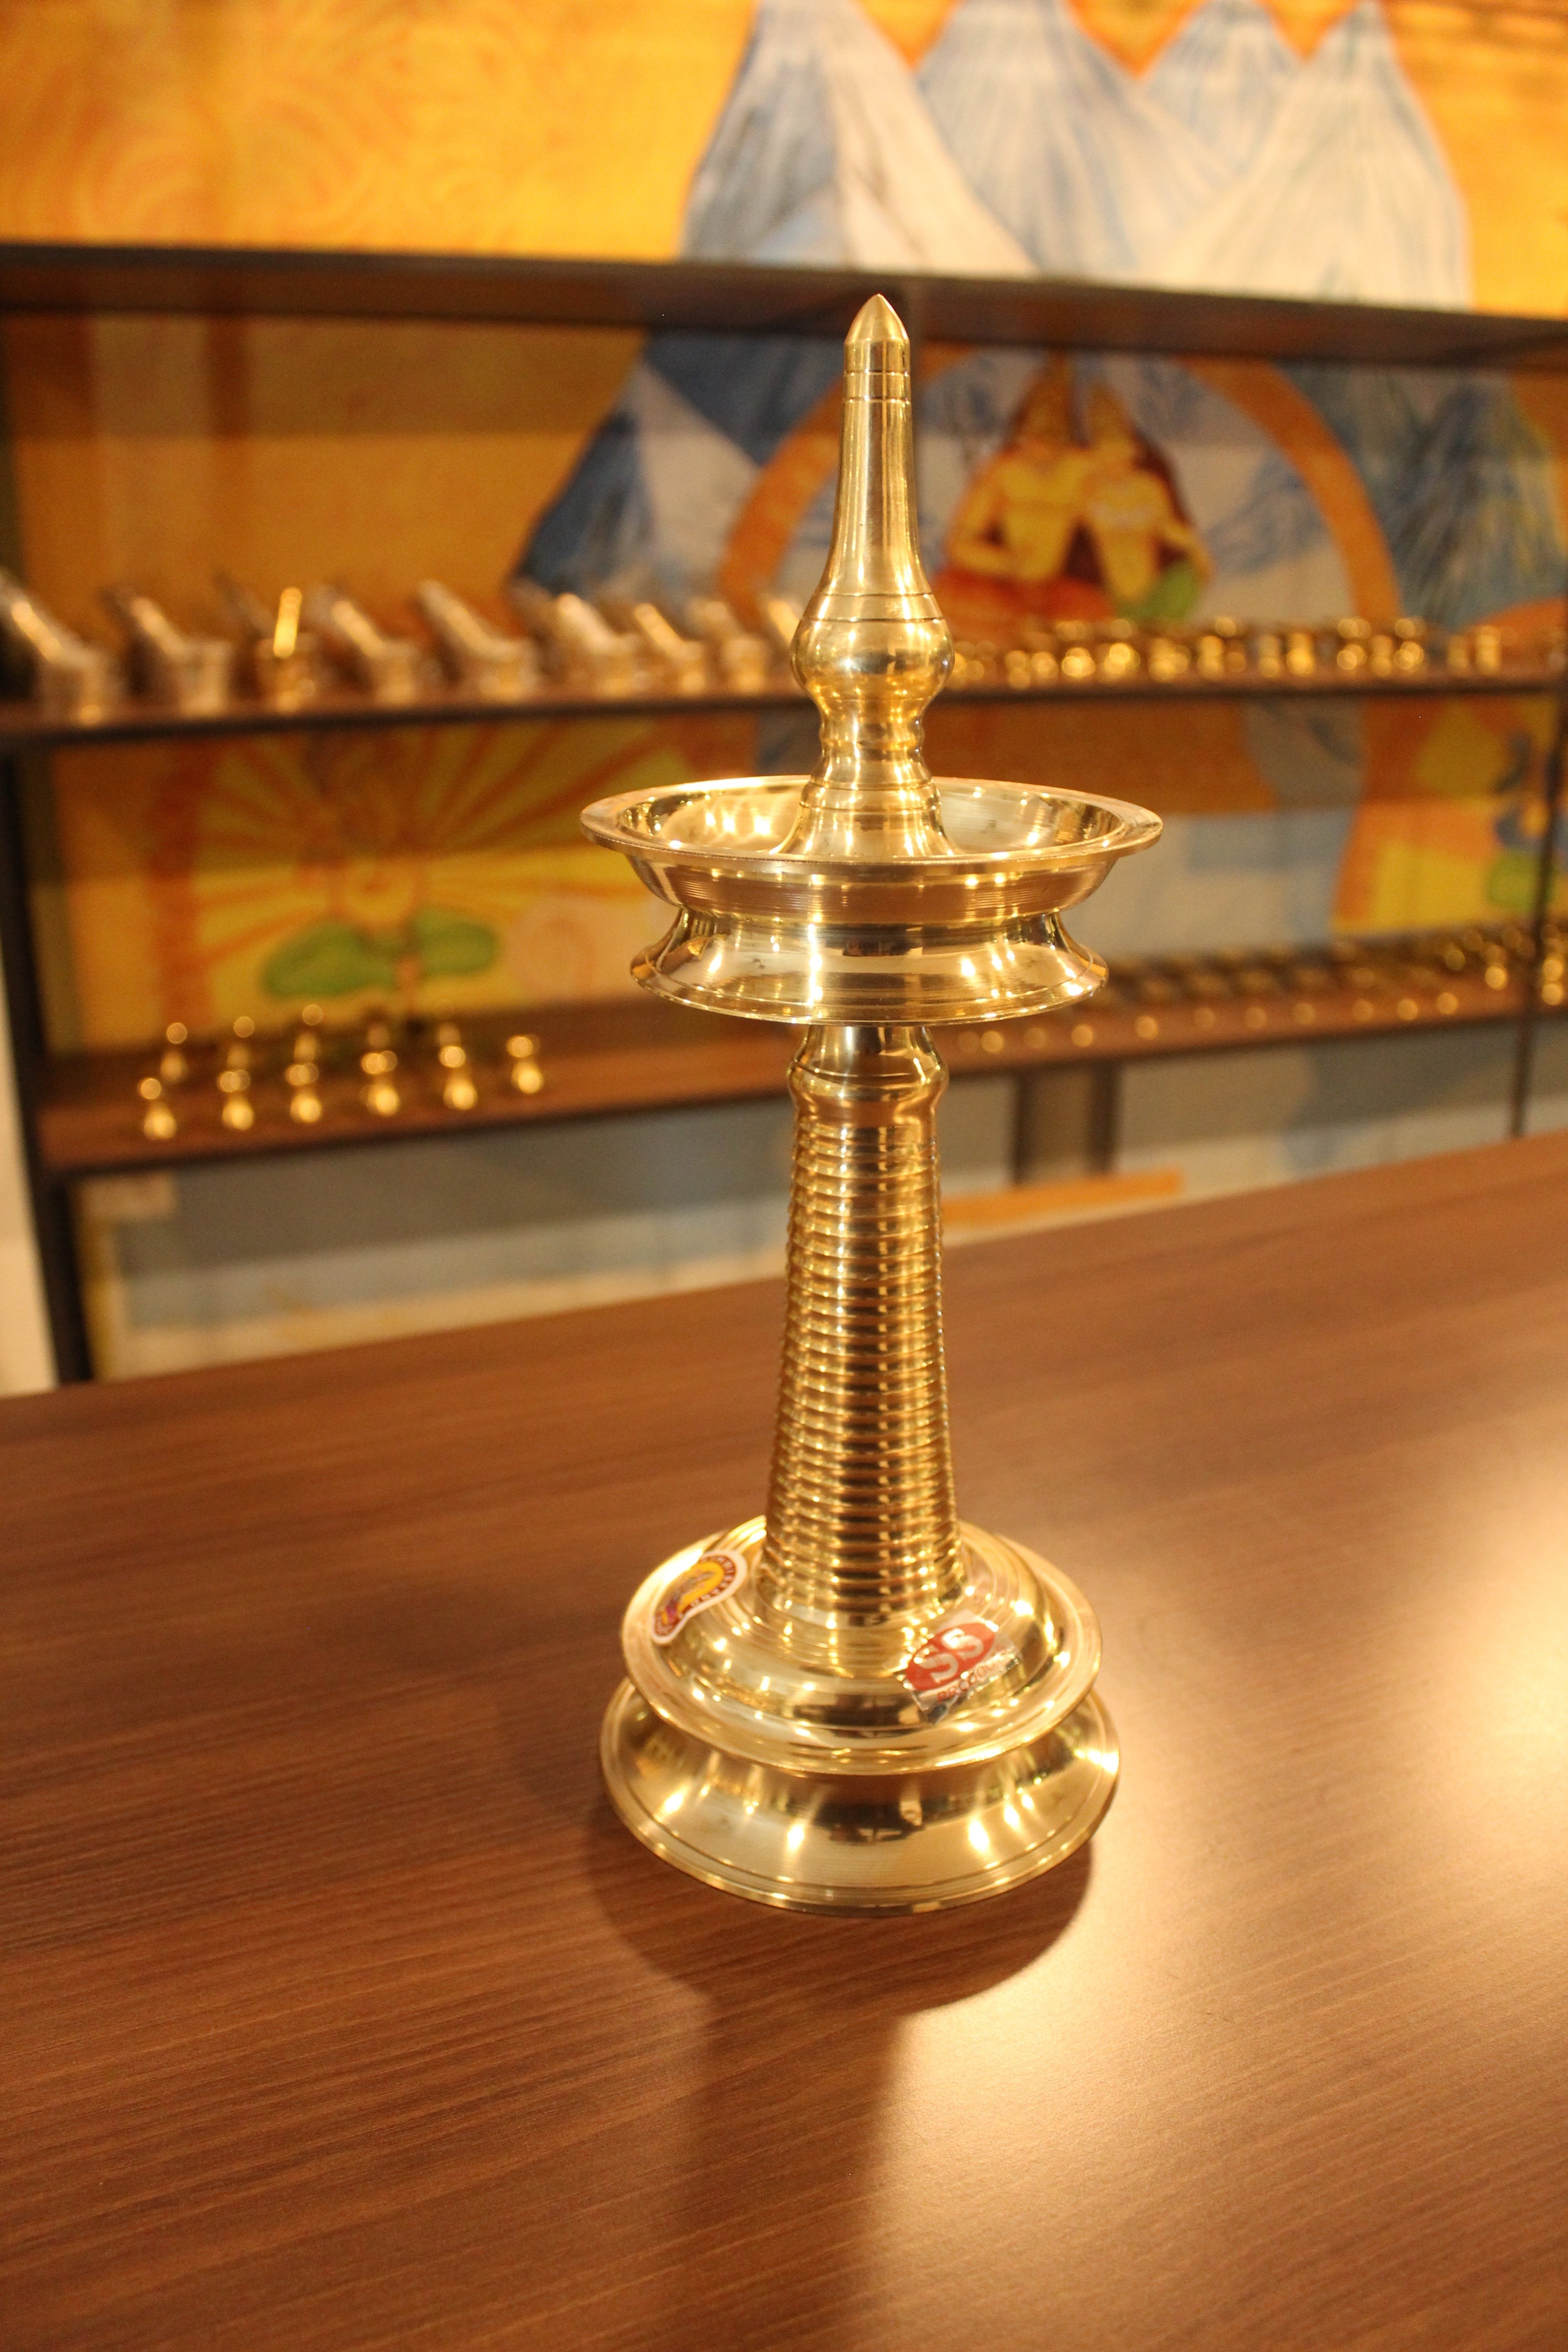 Nilavilakku Brass - Premium Brass from Cherakulam Vessels & Crockery - Just Rs. 1350! Shop now at Cherakulam Vessels & Crockery